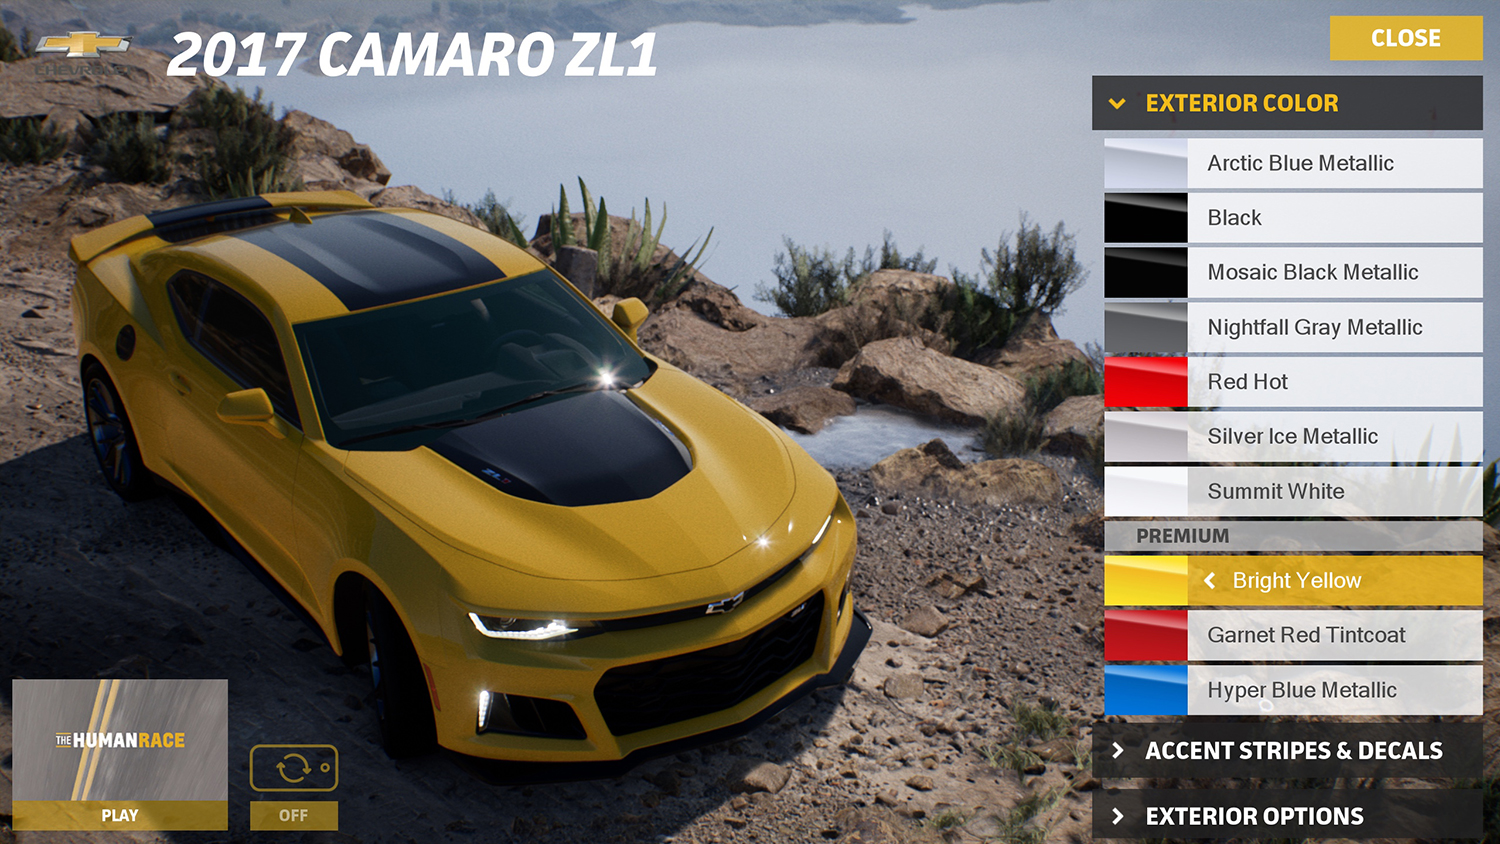 epic games unreal engine 4 powers new chevrolet car customizer camaro configurator bright yellow